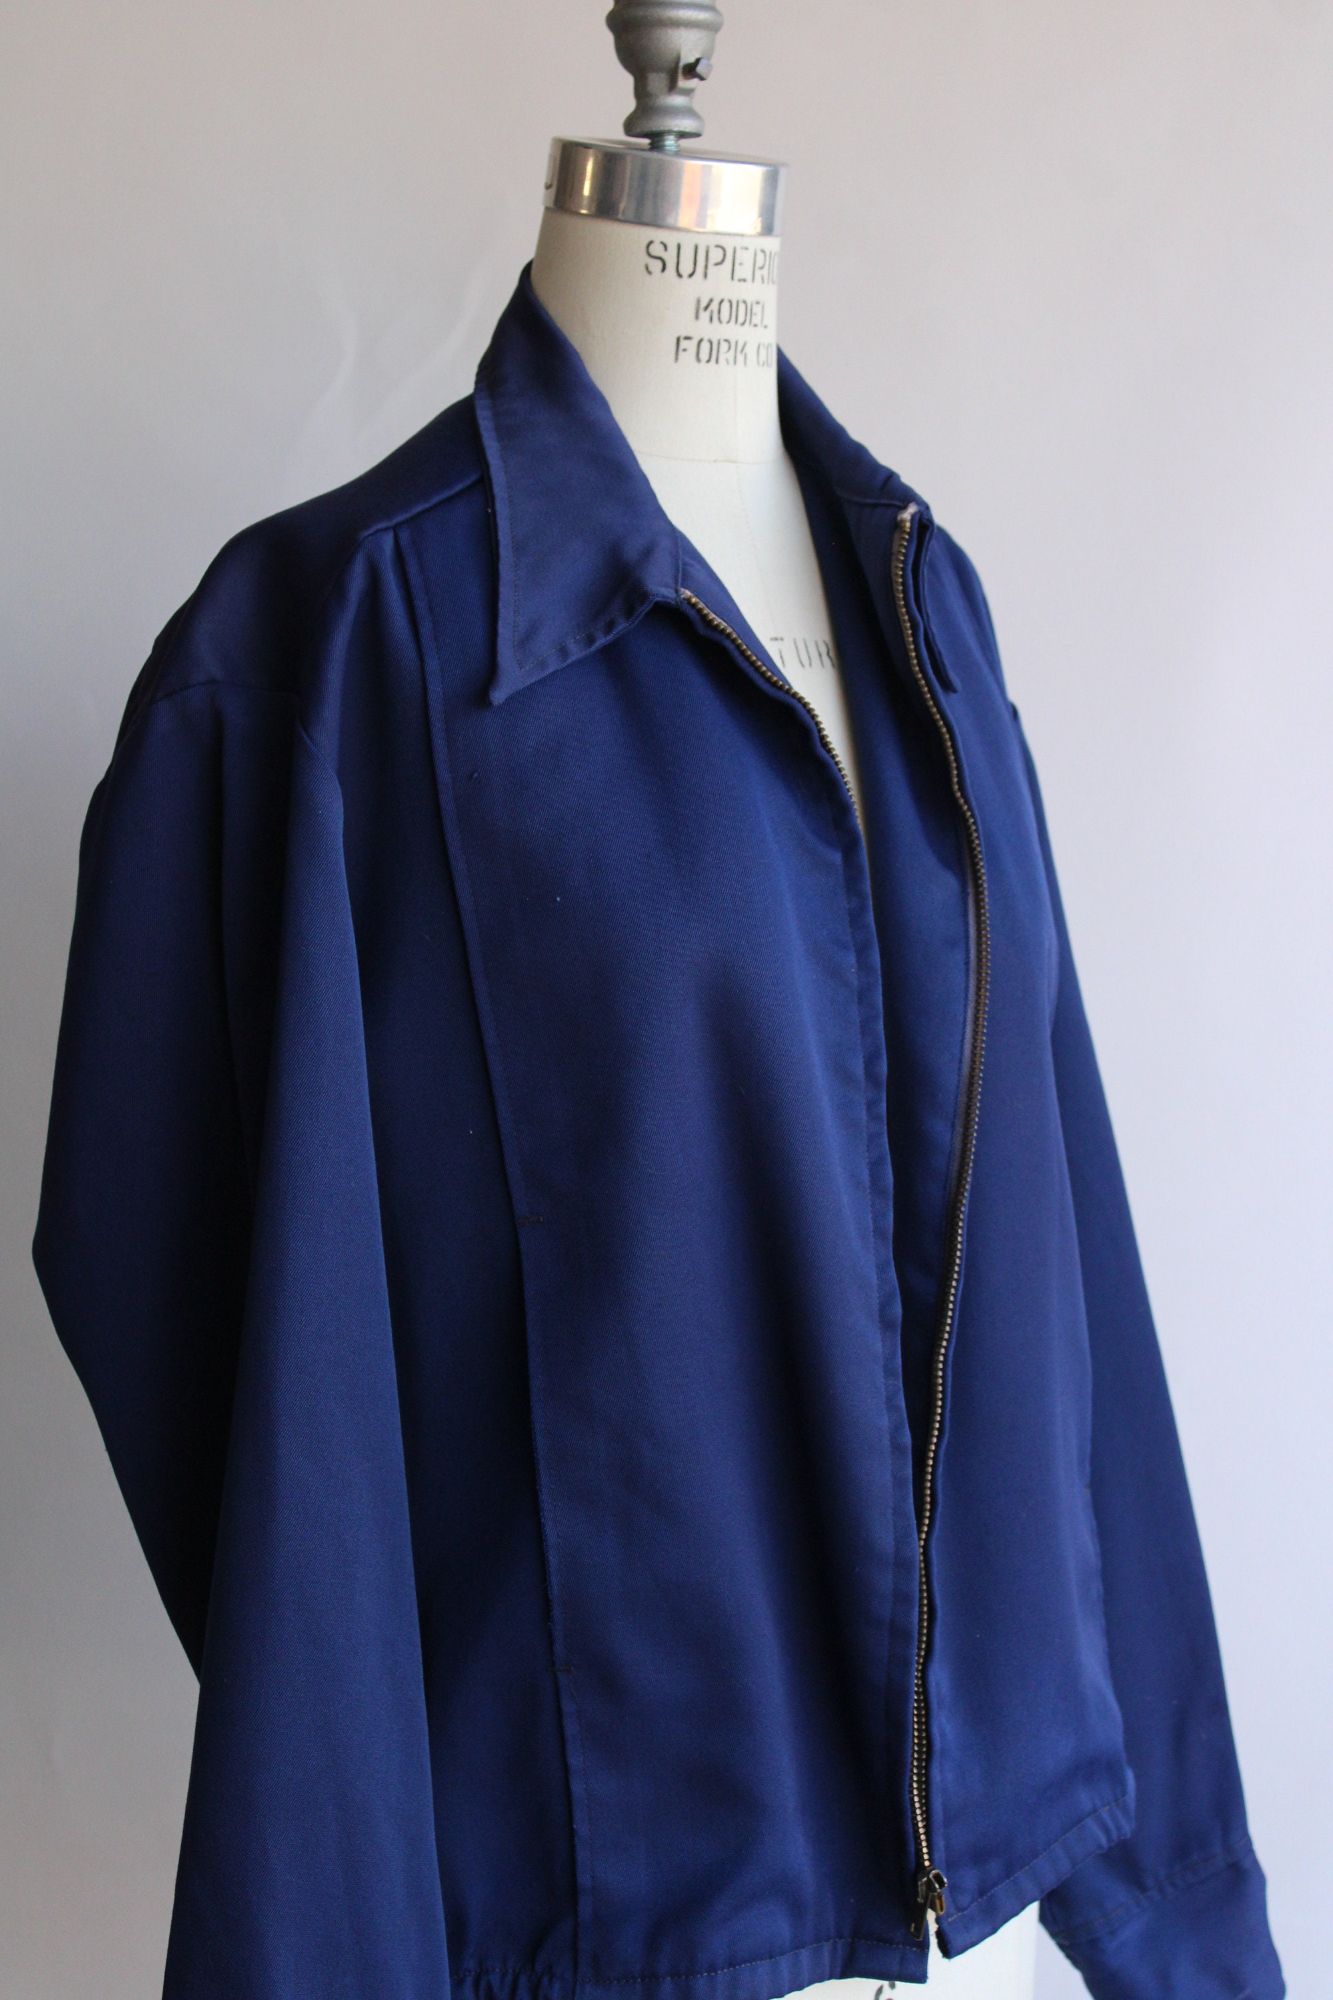 Vintage 1970s 1980s Mens Boss Uniform Co. Navy Blue Work Jacket